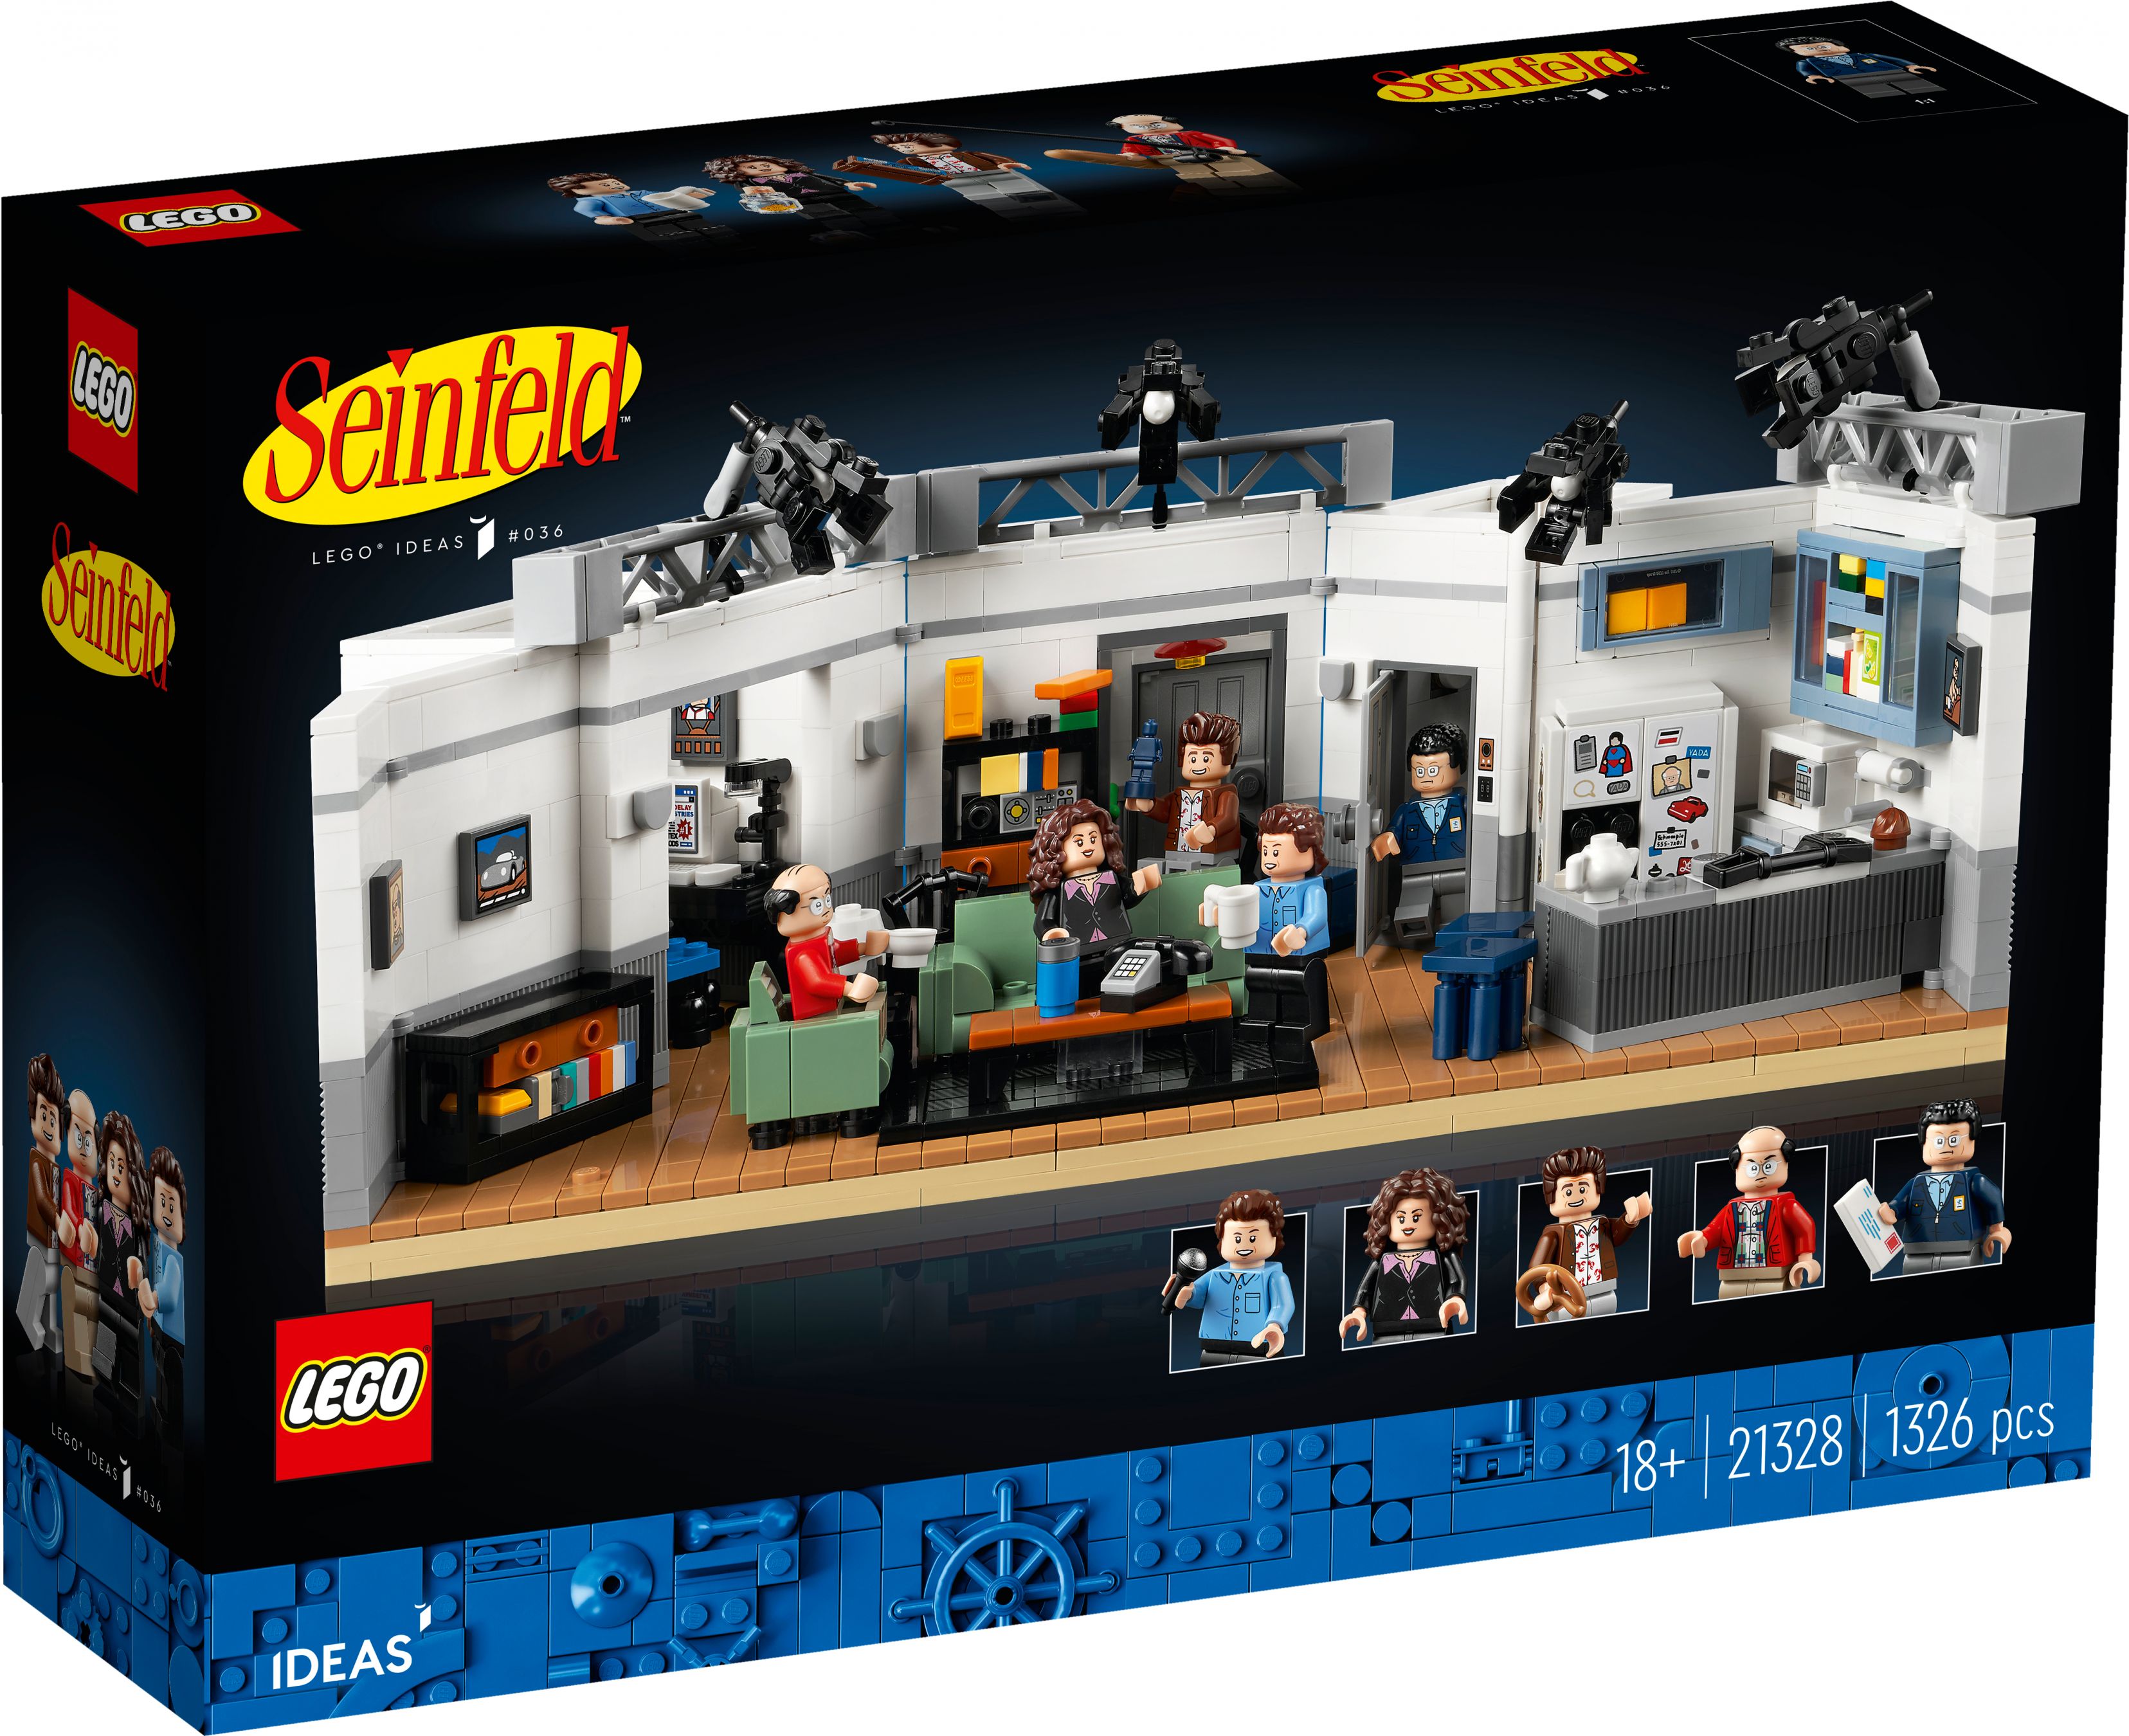 LEGO Ideas 21328 Seinfeld LEGO_21328_Box1_v29.jpg